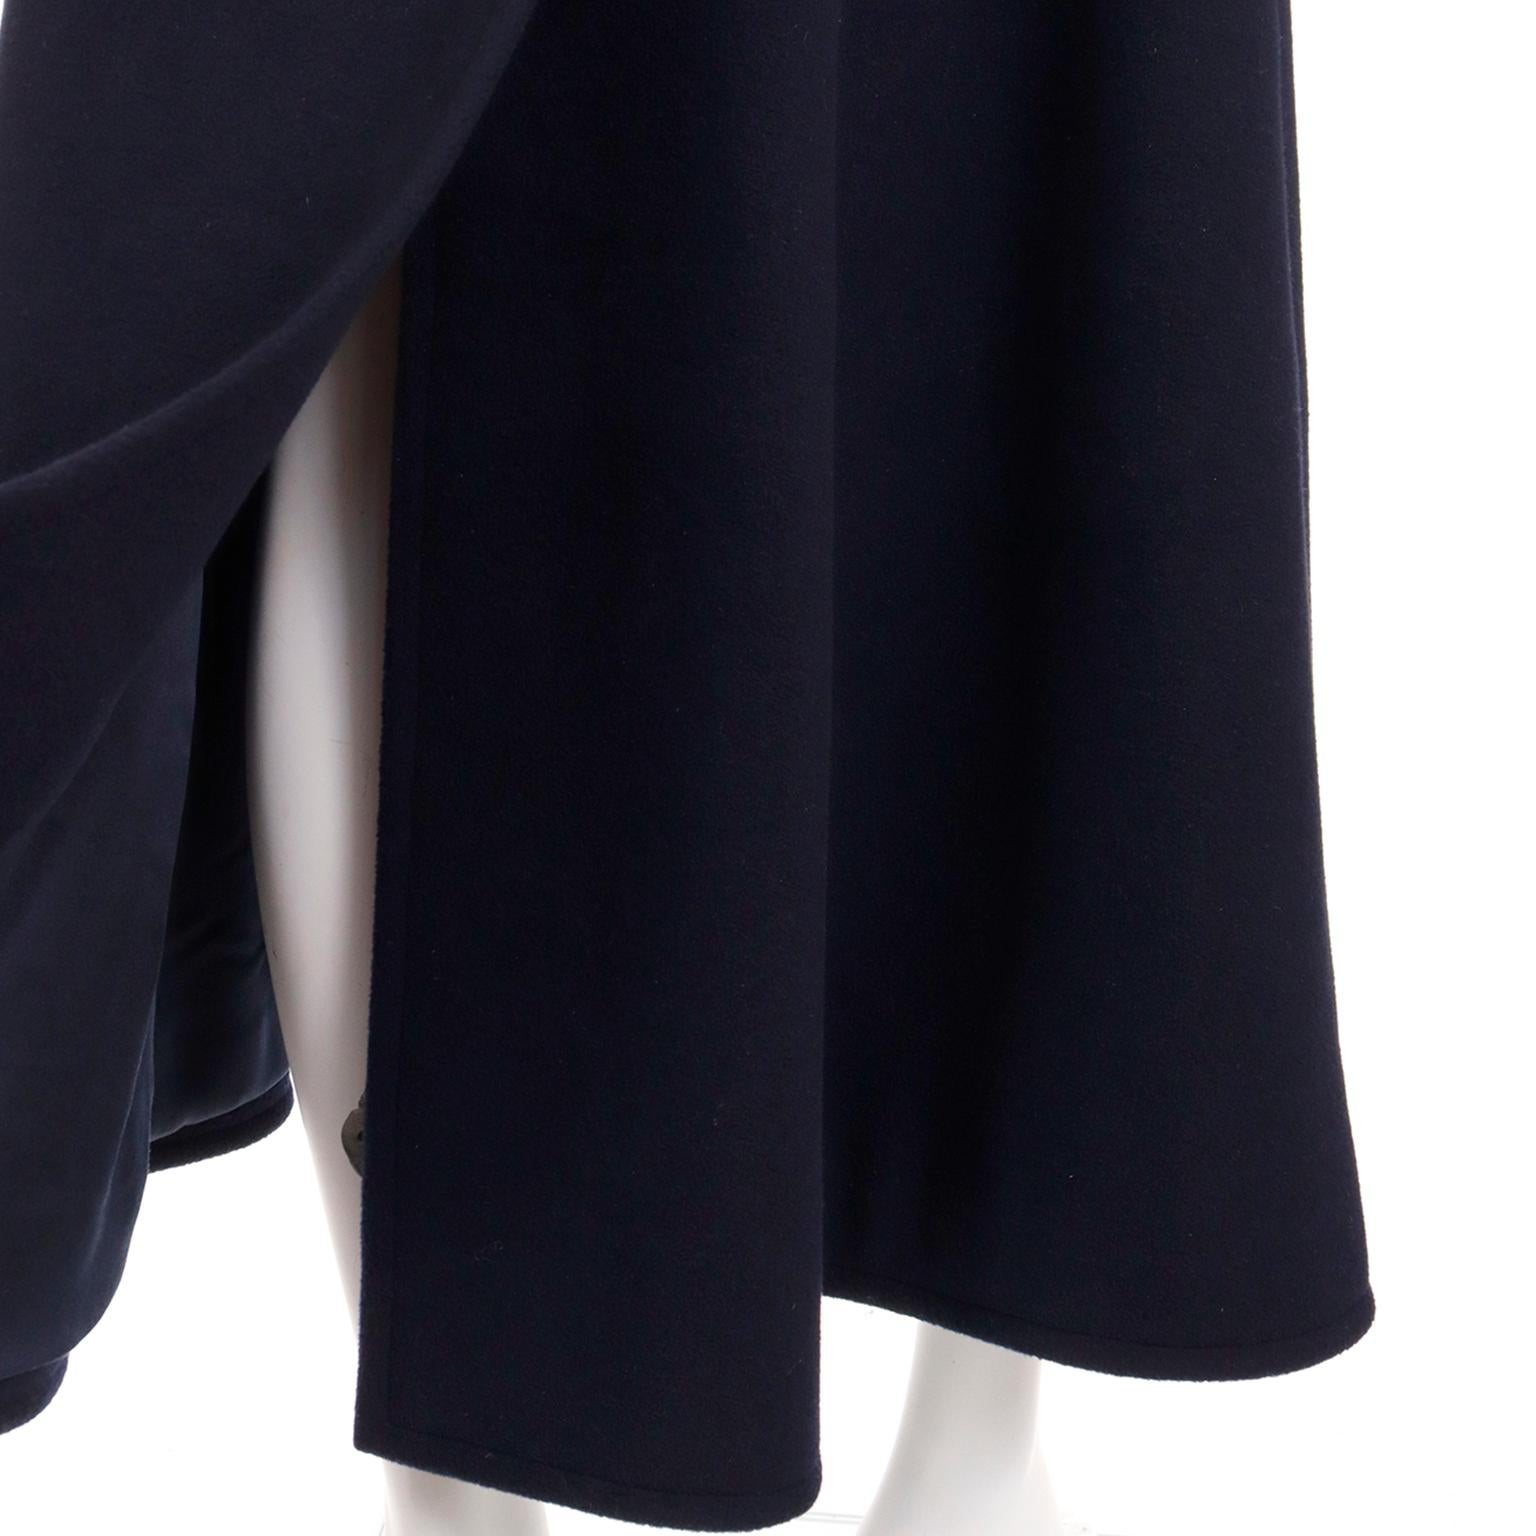 Yves Saint Laurent Haute Couture 1976 Navy Blue Wool Coat w Sheared Mink Trim For Sale 1